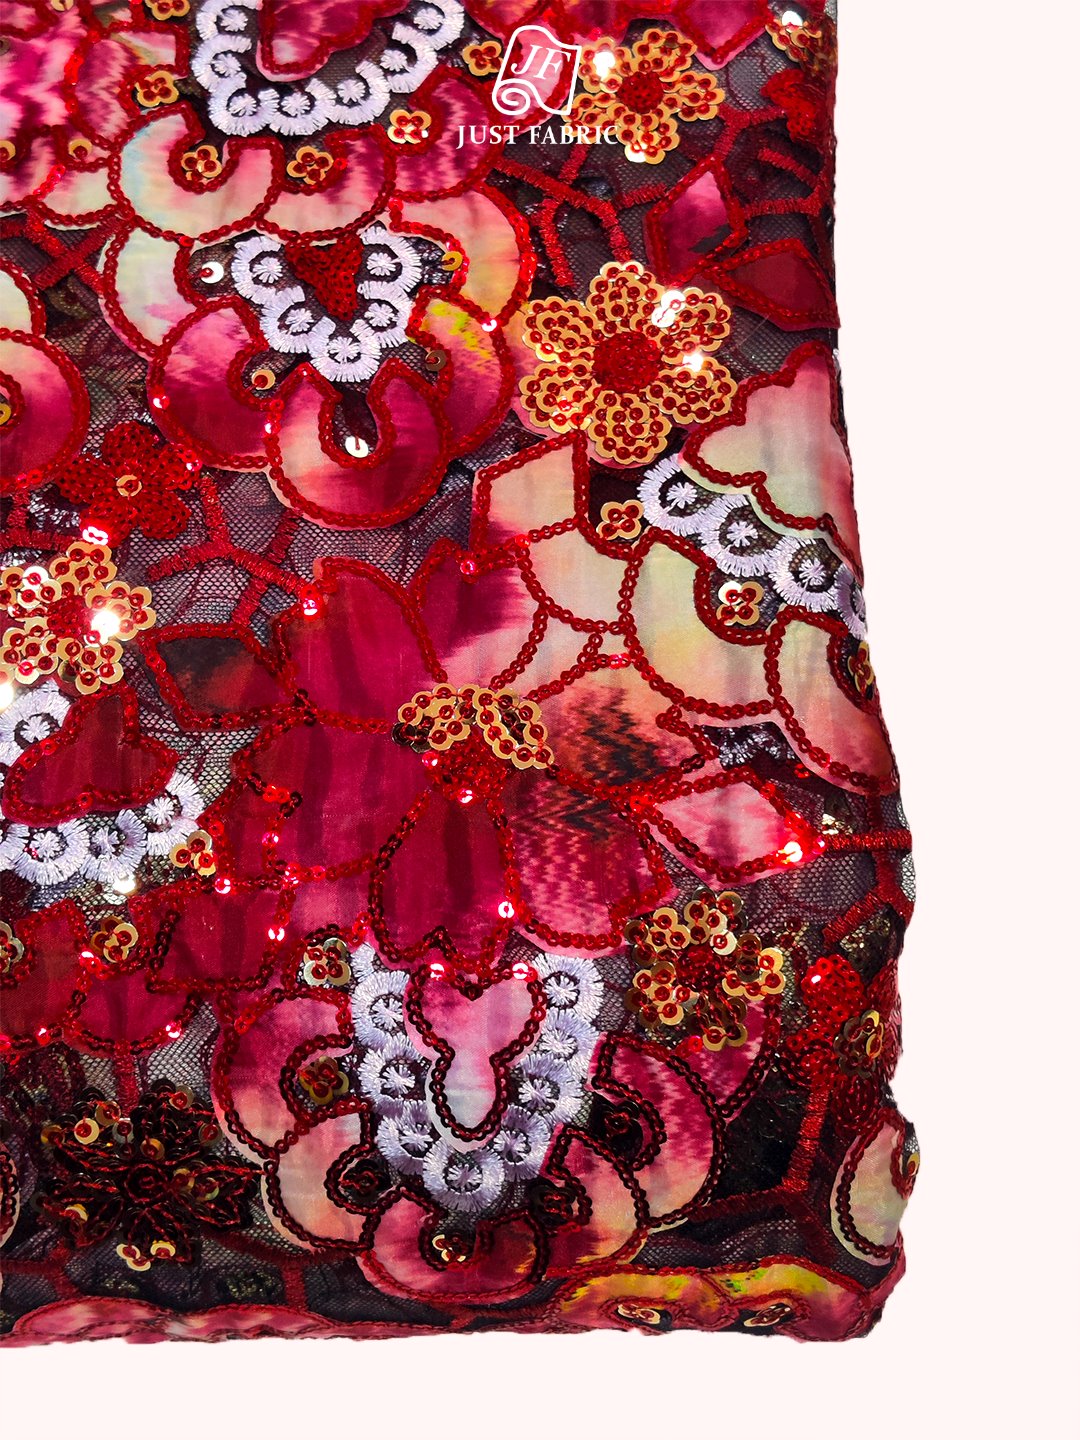 Visual Textile Embroidered Pintuck Taffeta 45 x 45-Inch Square Tablecloth  Chocolate